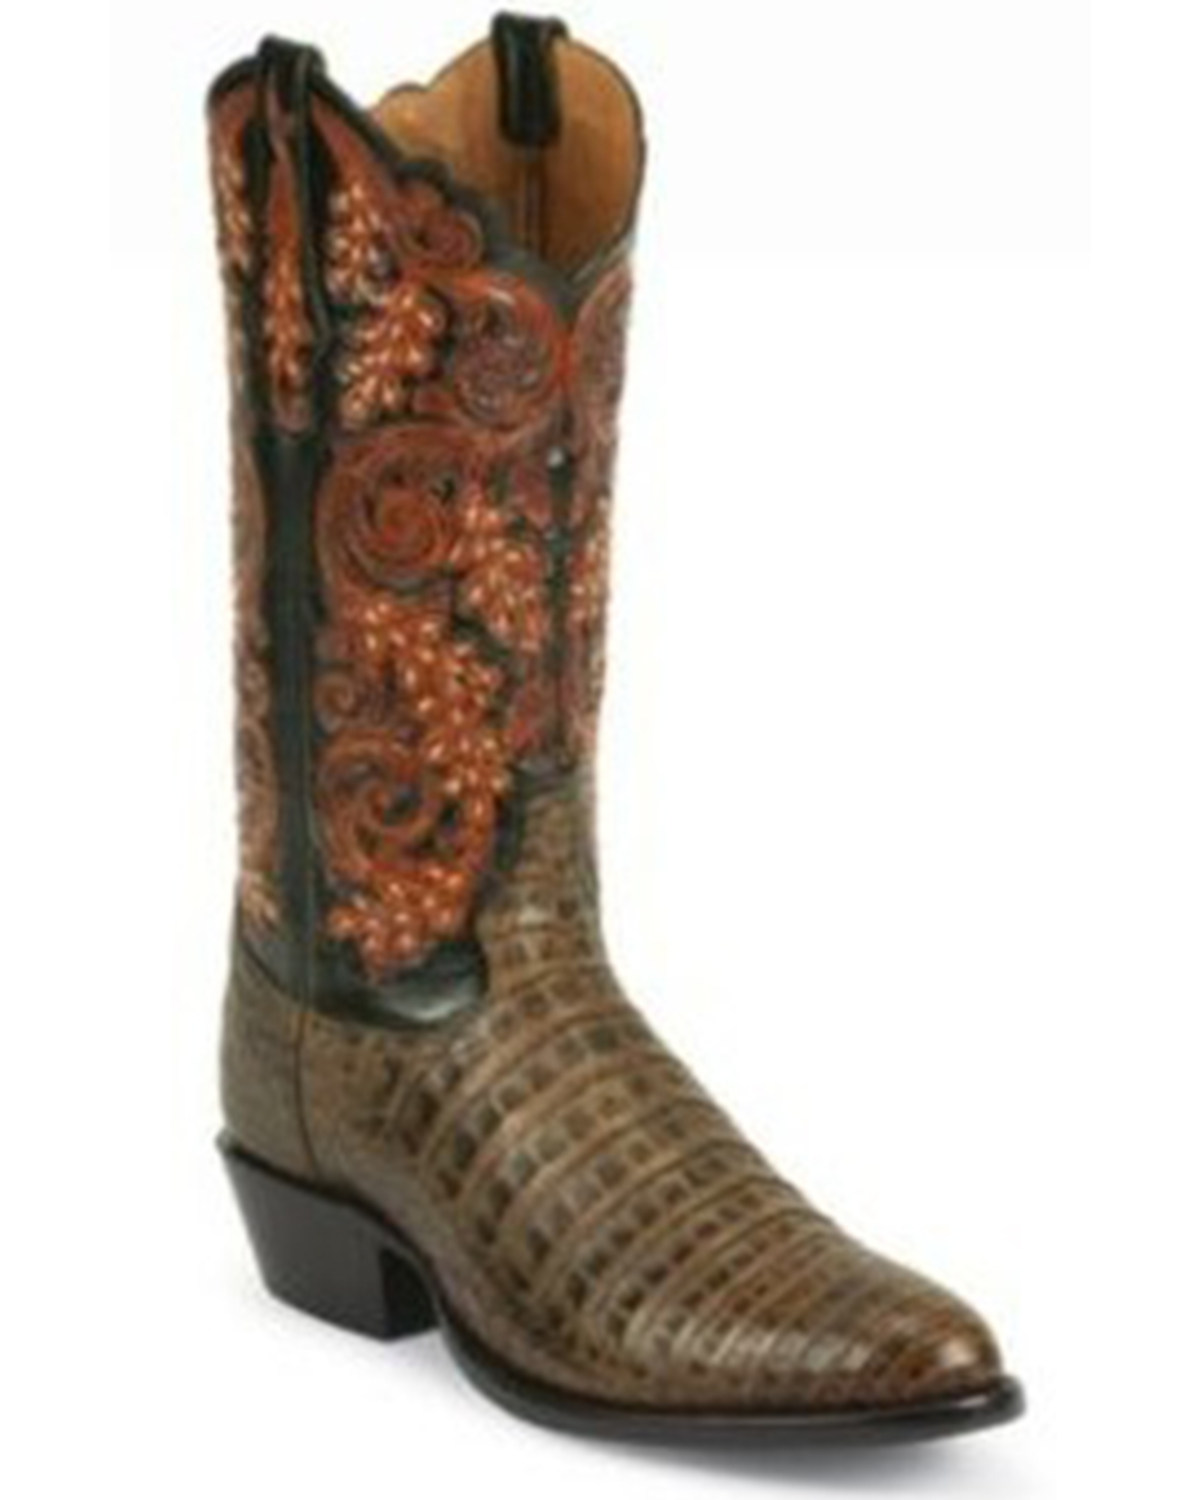 Tony Lama Men's Exotic Caiman Belly Western Boots - Medium Toe